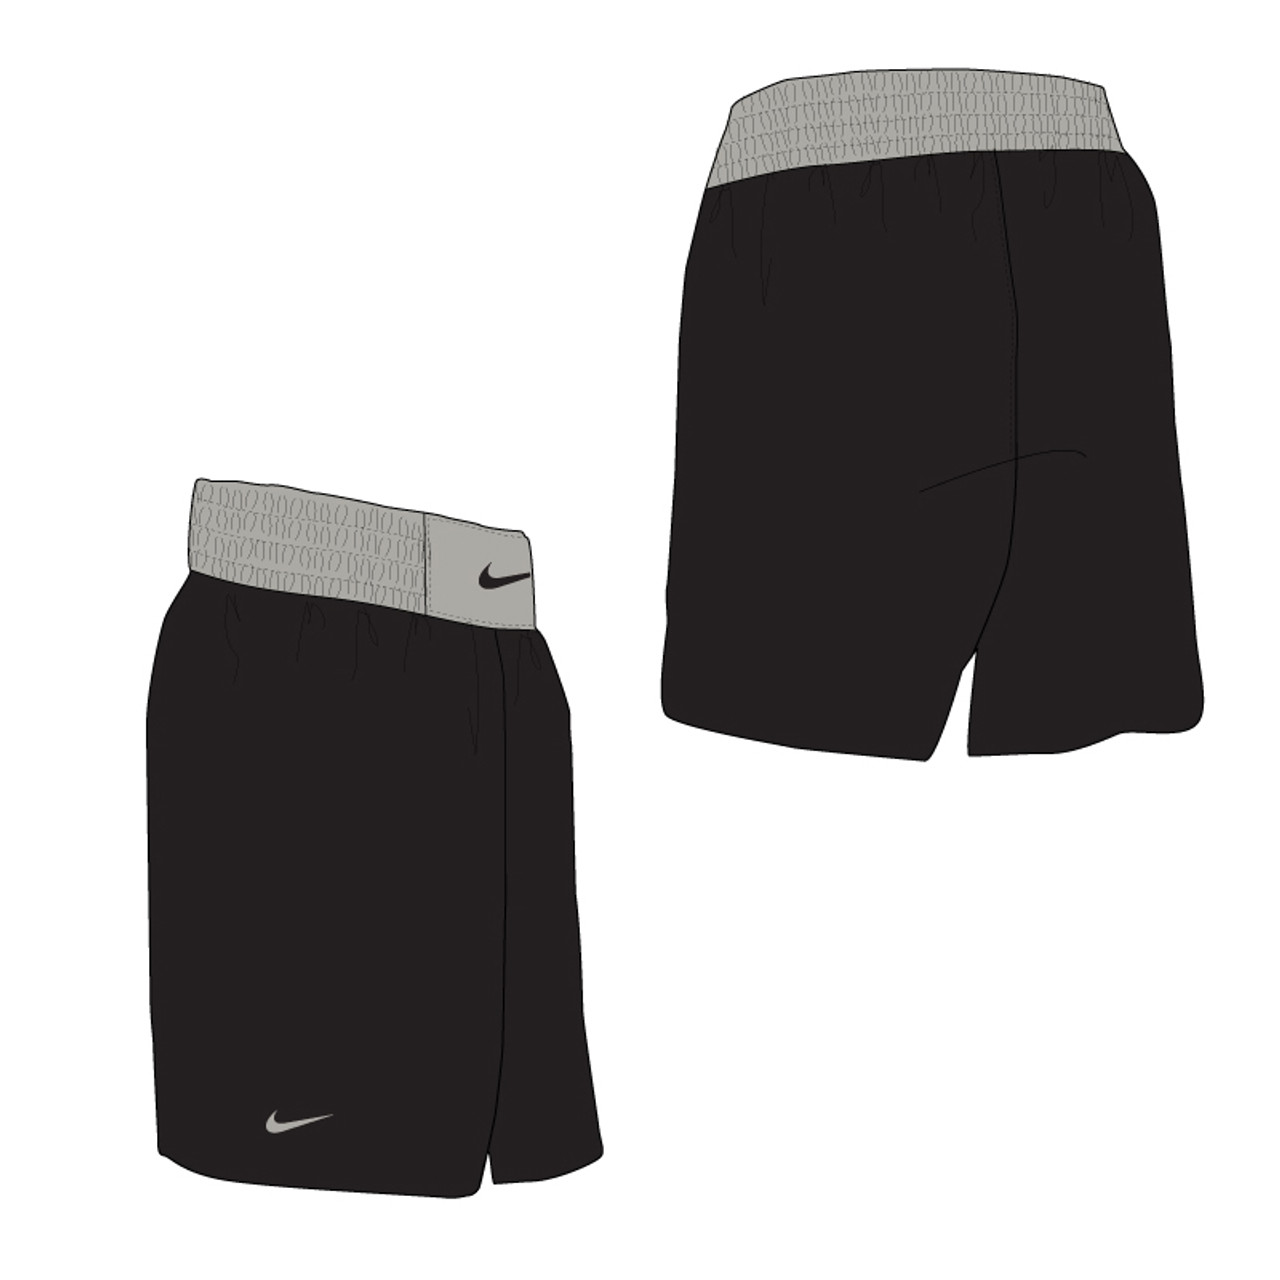 Nike Boxing Short - Black / Pewter 